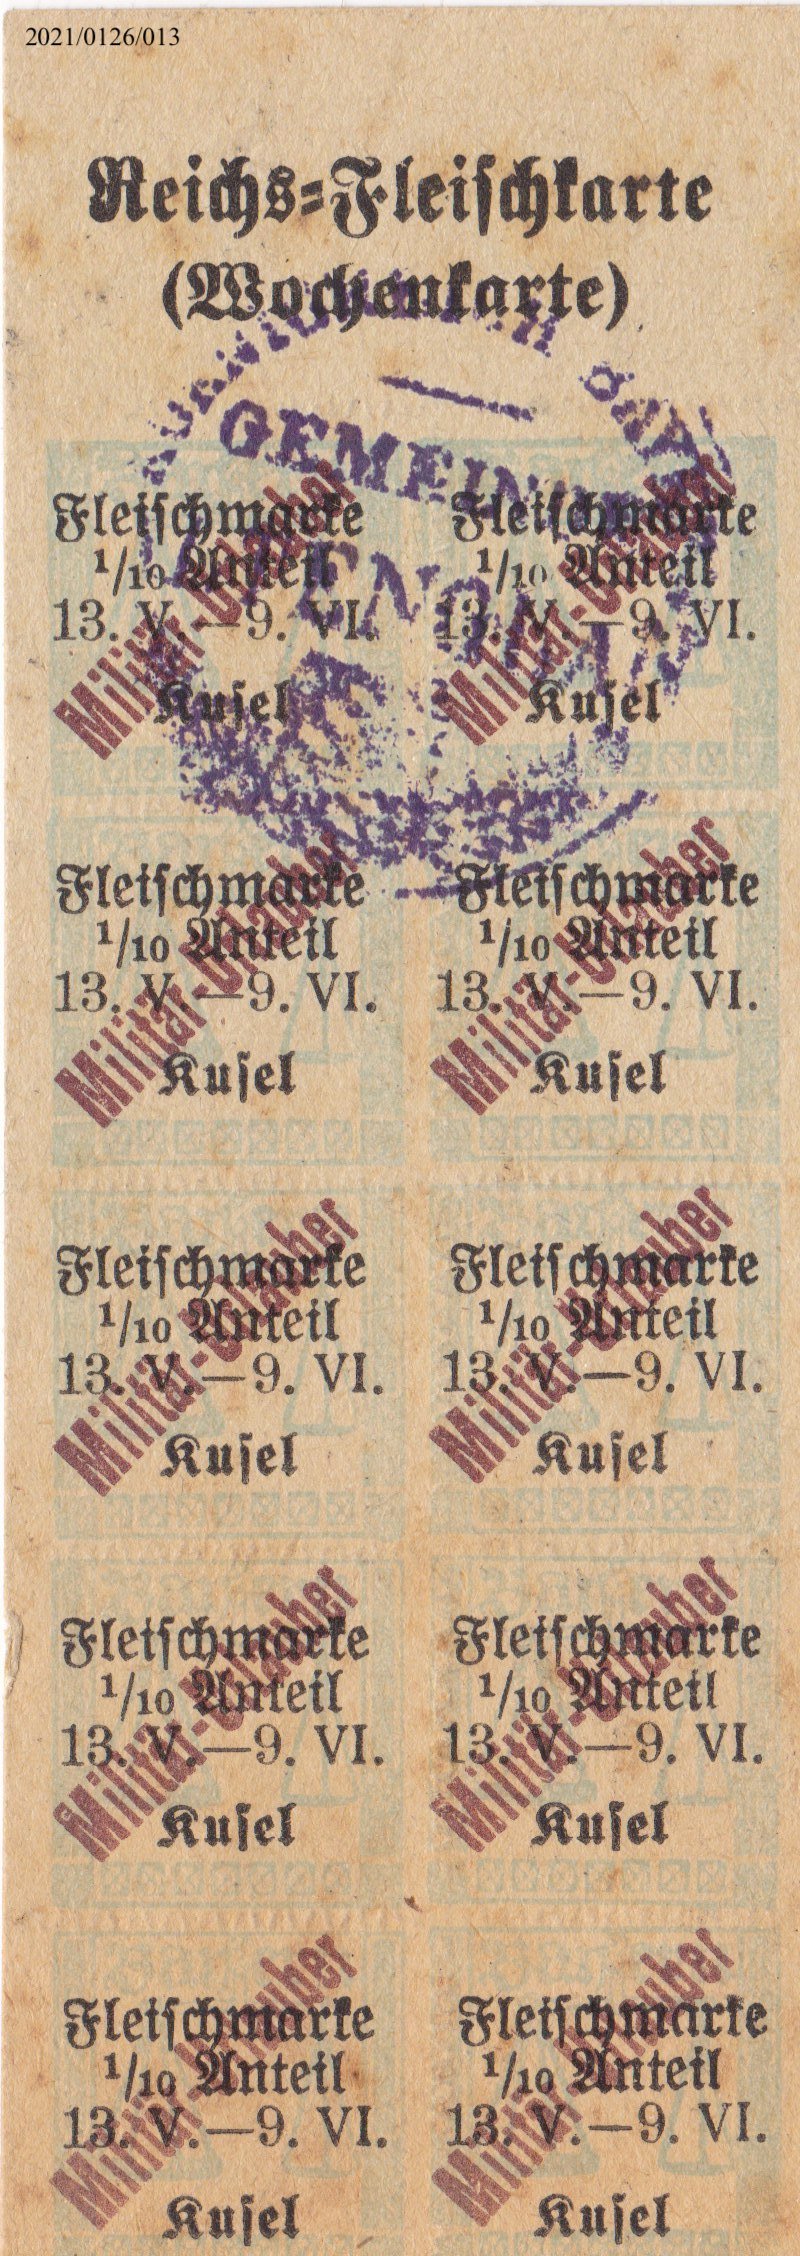 Reichs-Fleischkarte (Wochenkarte) Militär-Urlauber (Museumsgesellschaft Bad Dürkheim e. V. CC BY-NC-SA)